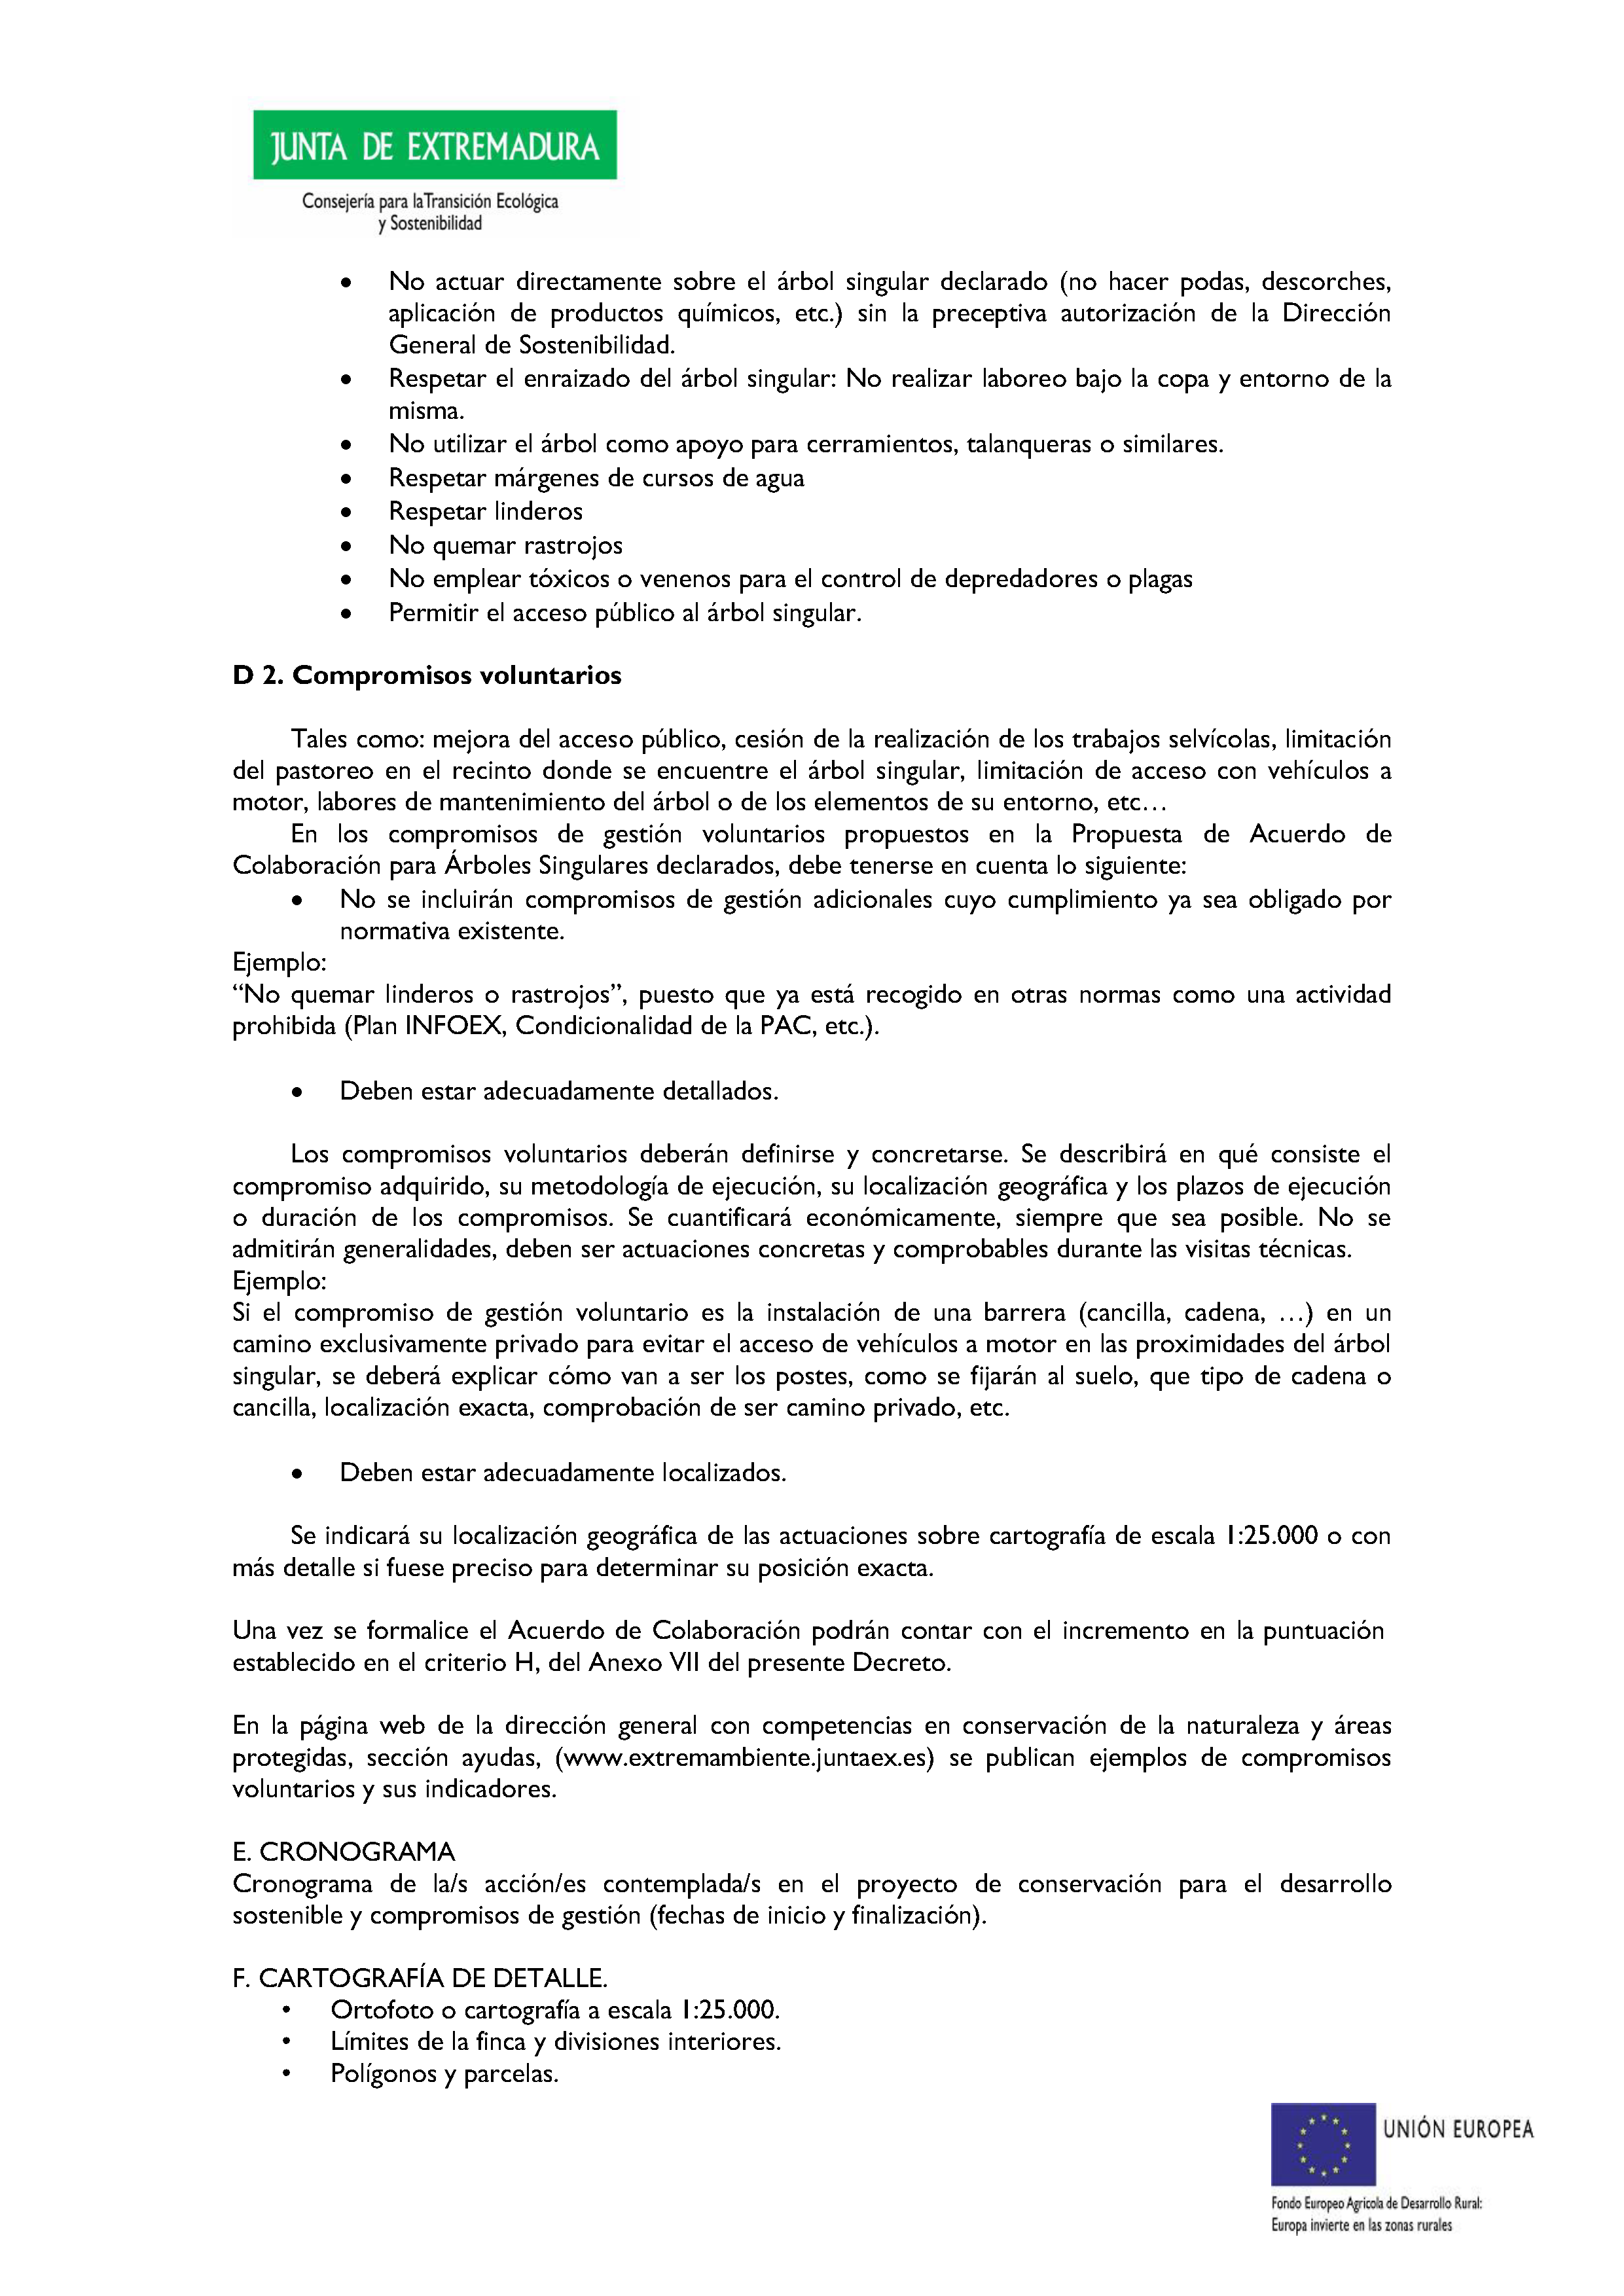 ANEXO VIII 1. PROPUESTA DE ACUERDO DE COLABORACIÓN PARA EL DESARROLLO SOSTENIBLE Pag 6